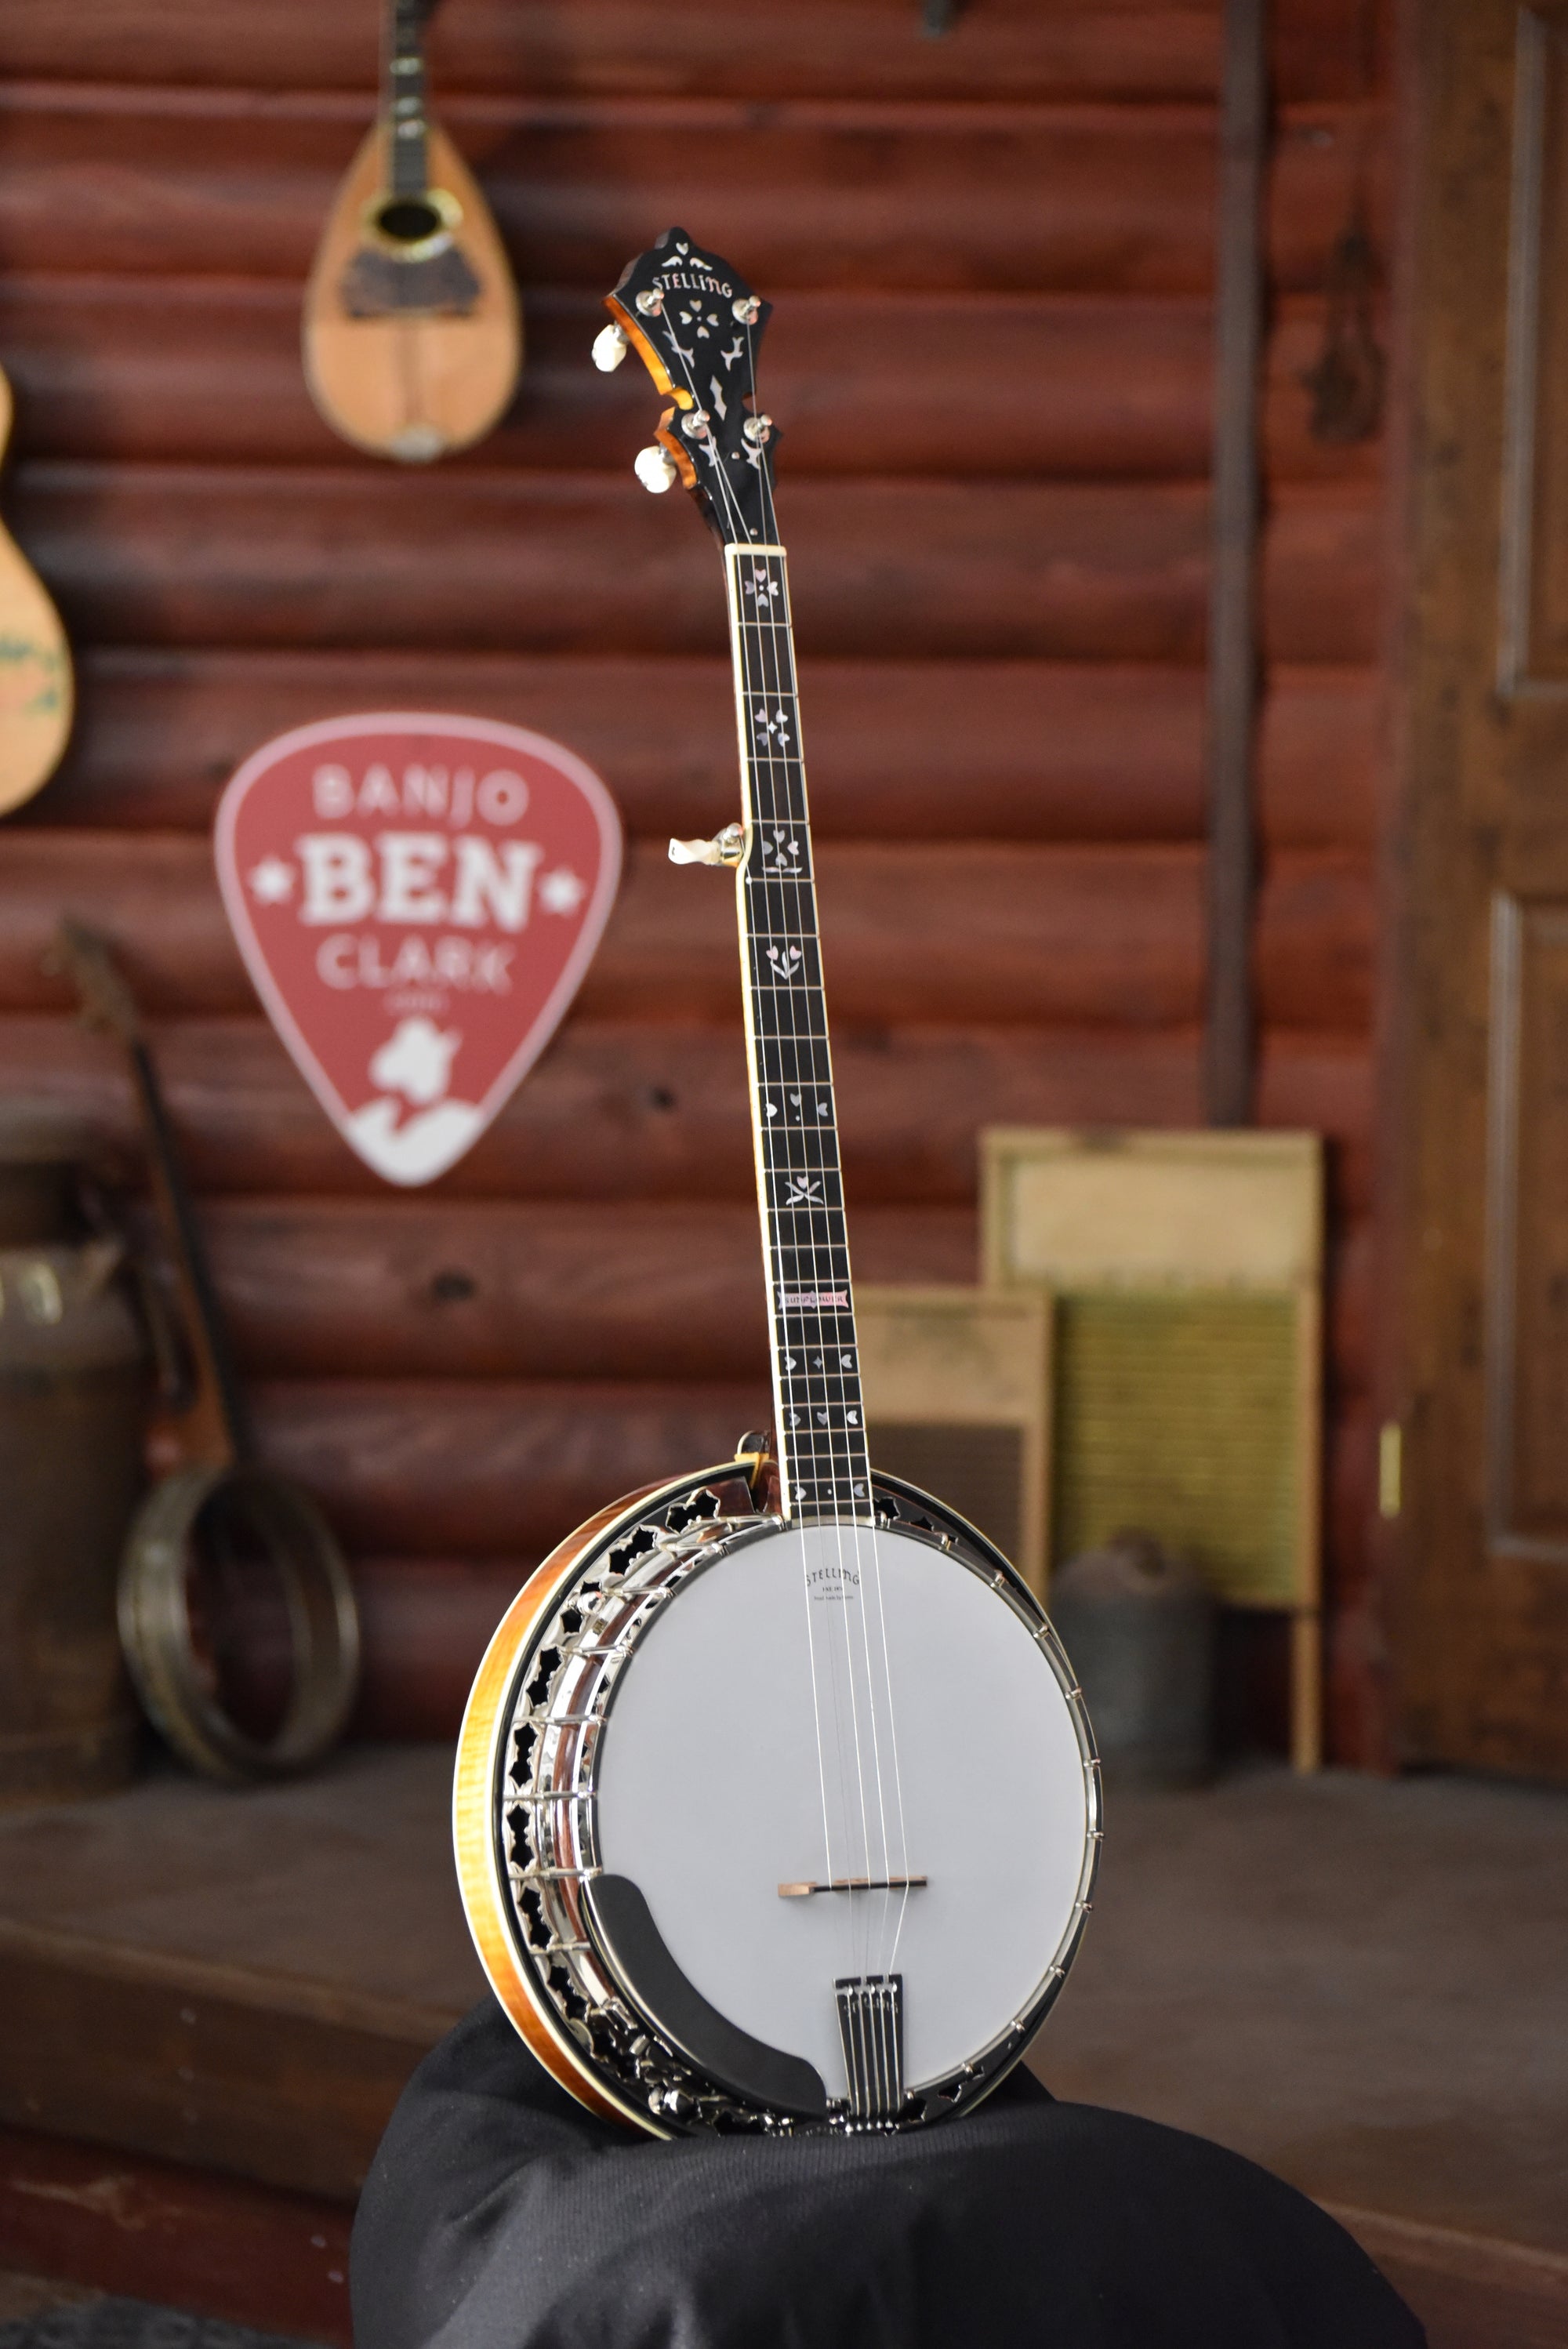 Stelling Sunflower Bluegrass Banjo With Case - Banjo Ben's Store